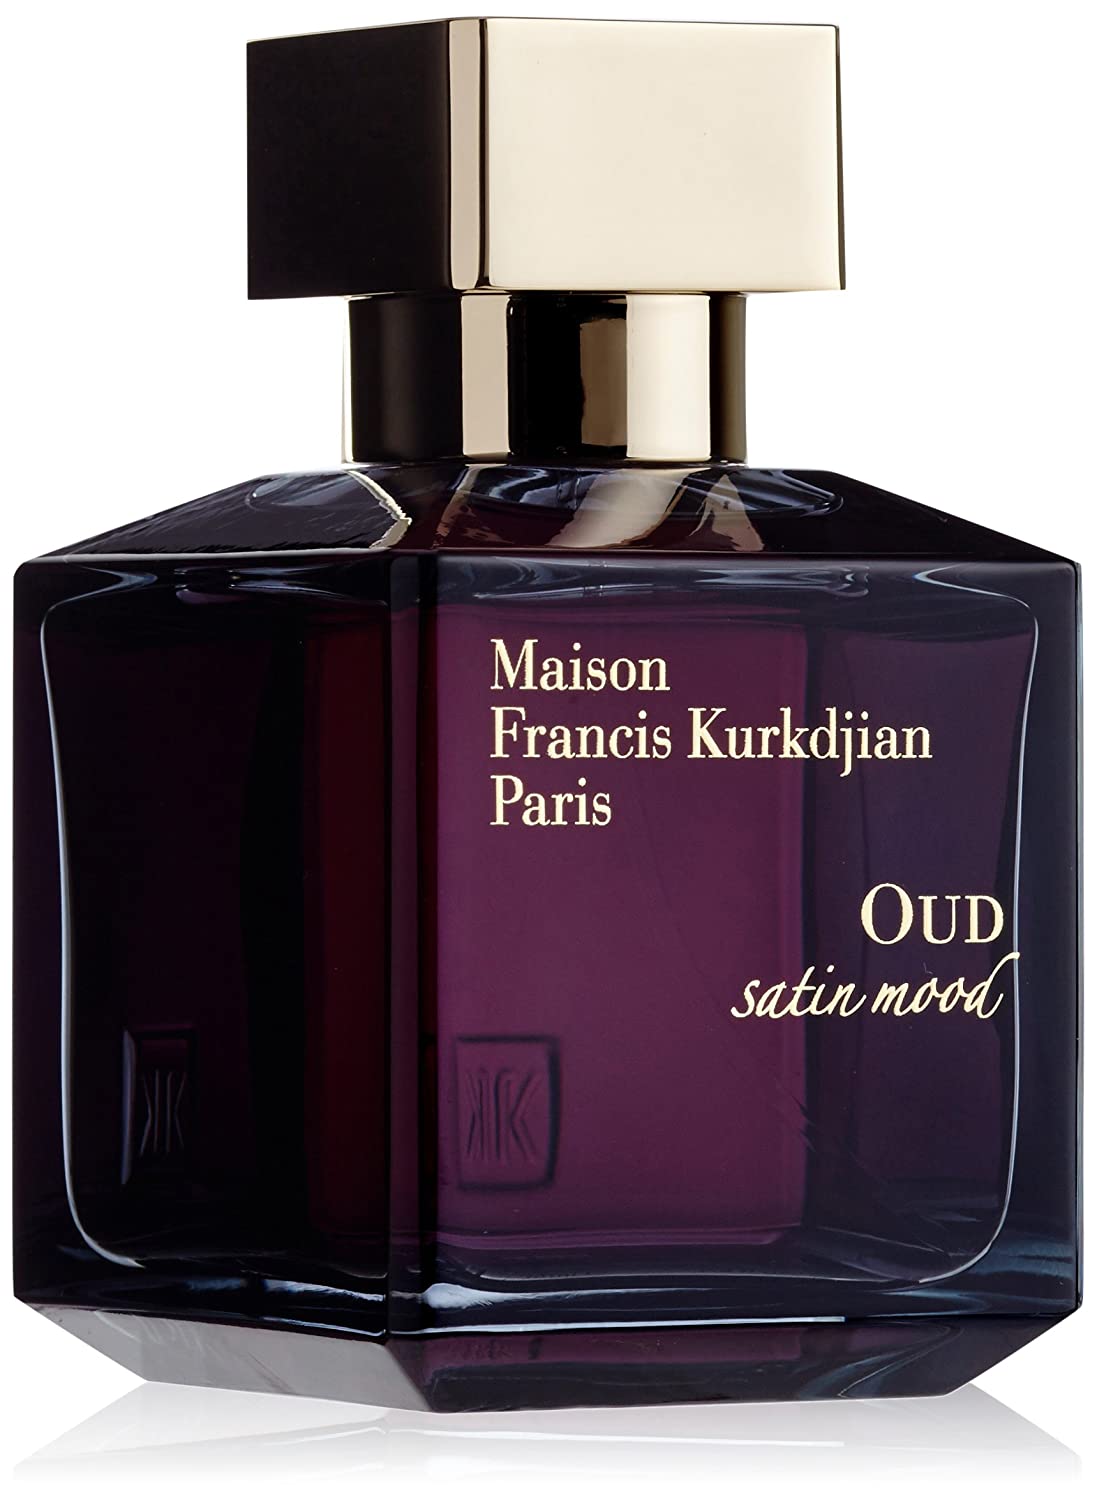 Maison Francis Kurkdjian Paris Oud Satin Mood - 2.4 fl oz